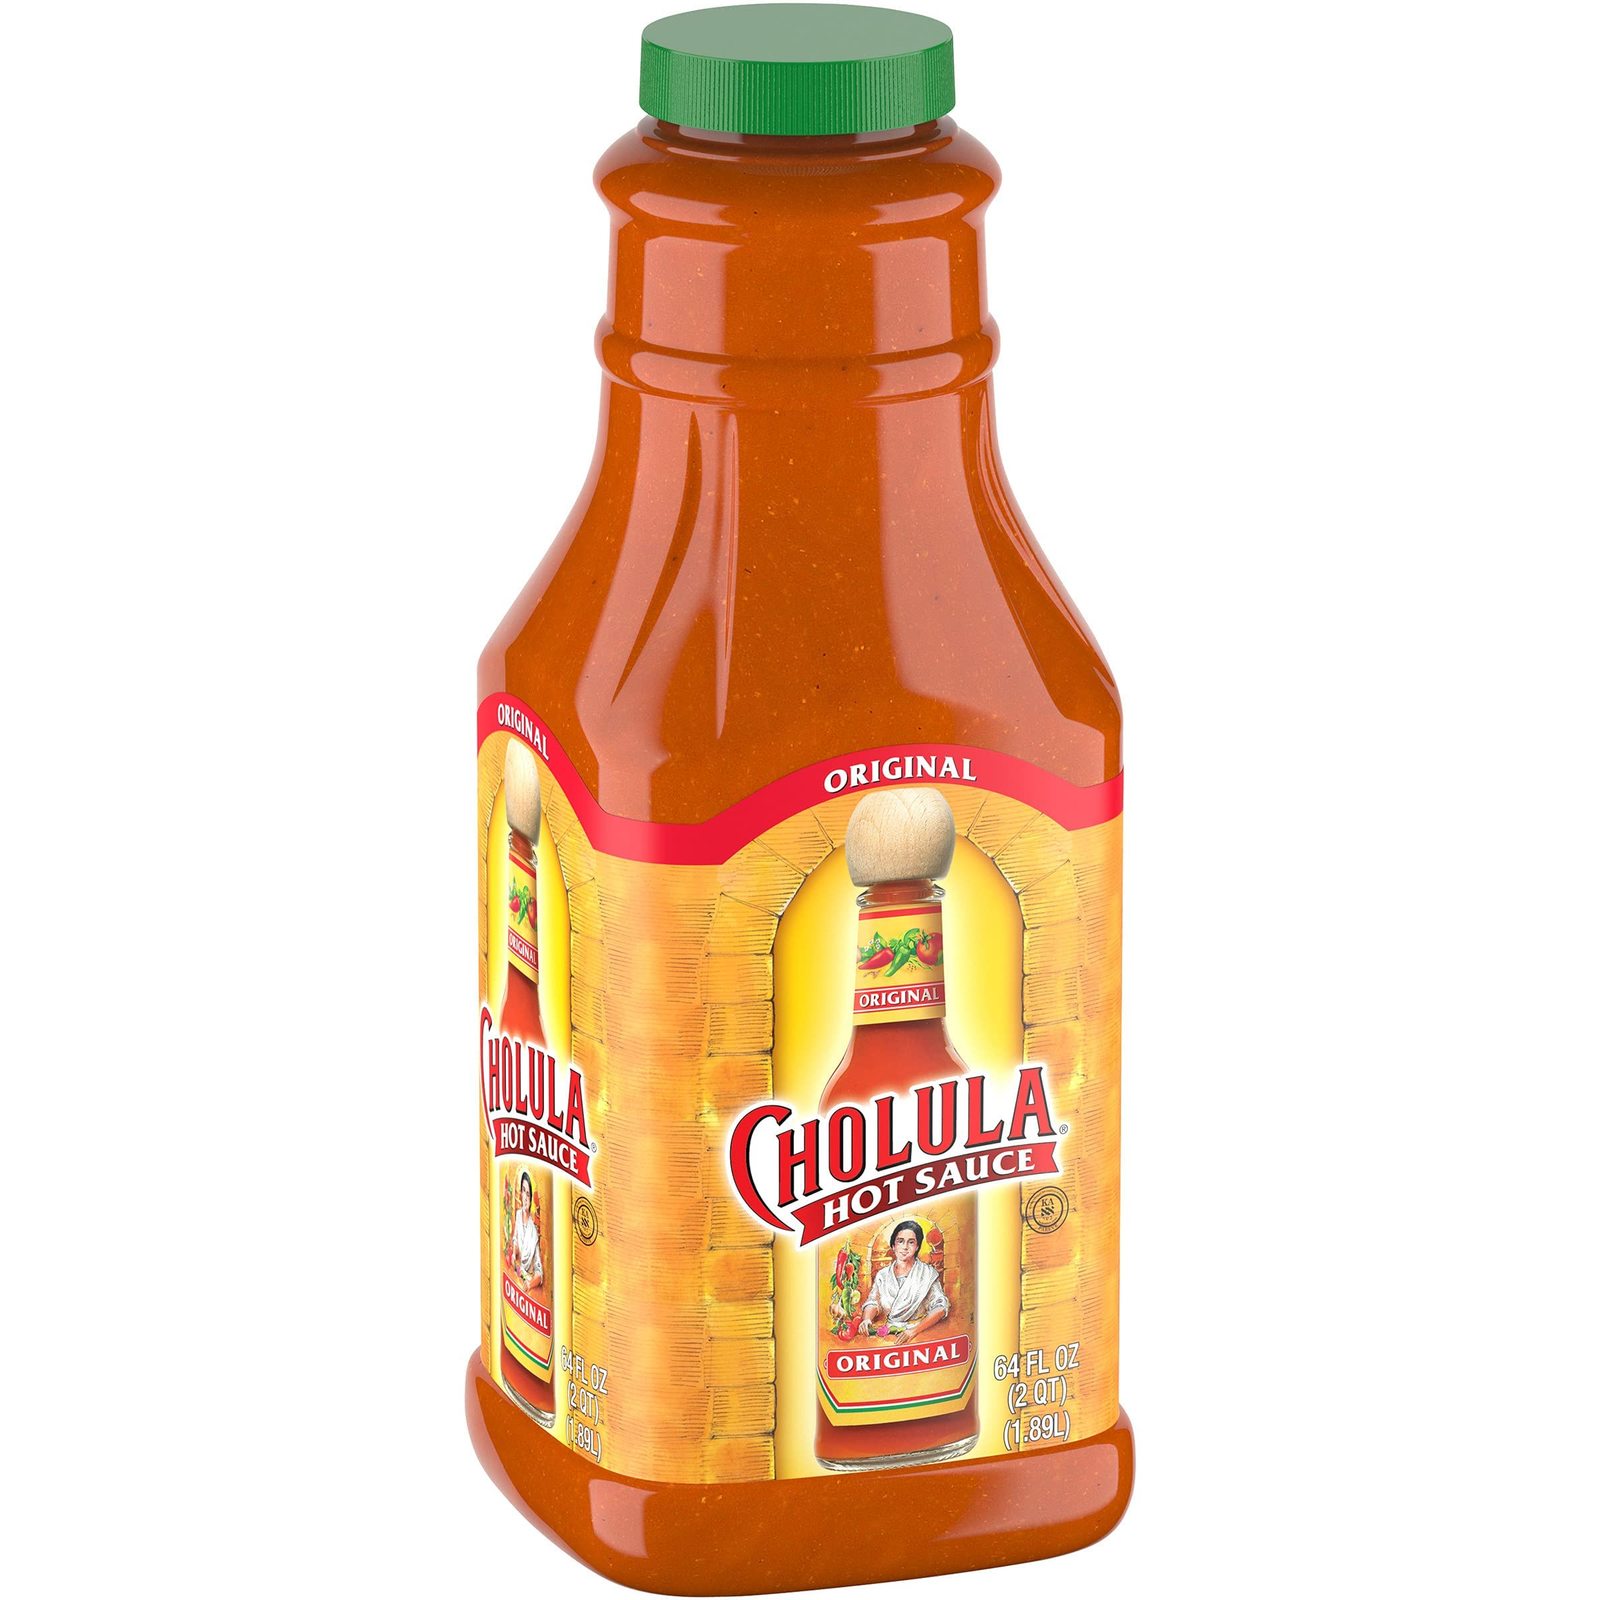 Cholula Original Hot Sauce, 64 fl oz - One 64 Fluid Ounce Bulk Container of Hot  - $31.00